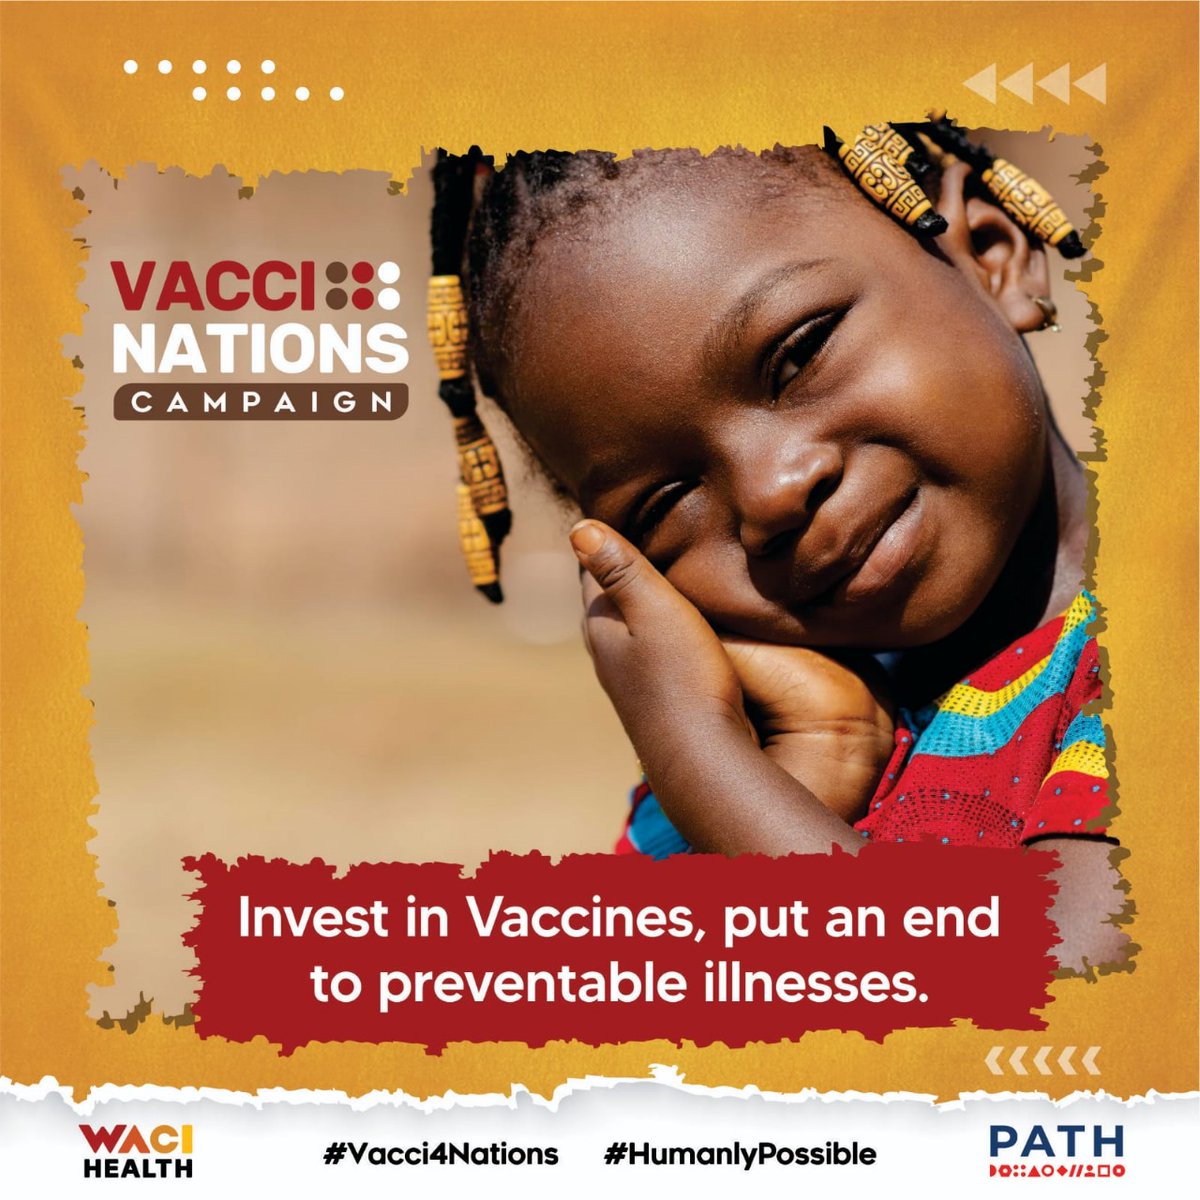 @path @PATHadvocacy @gavi @MTotoNews @WACIHealth @Gloriamululu @WanjikuMerci @QueerSpacKe @ItsKyuleNgao @SaraKe_biya @its_qario @mariahakinyi11 @Shis1Shisia Diverse financing strategies are key to ensuring sustainable immunization programs across Africa. Today's webinar will discuss the progress and commit to further action. @PATH @PATHadvocacy, @WACIHealth @gavi @MTotoNews #Vacci4Nations #HumanlyPossible #WorldImmunizationWeek